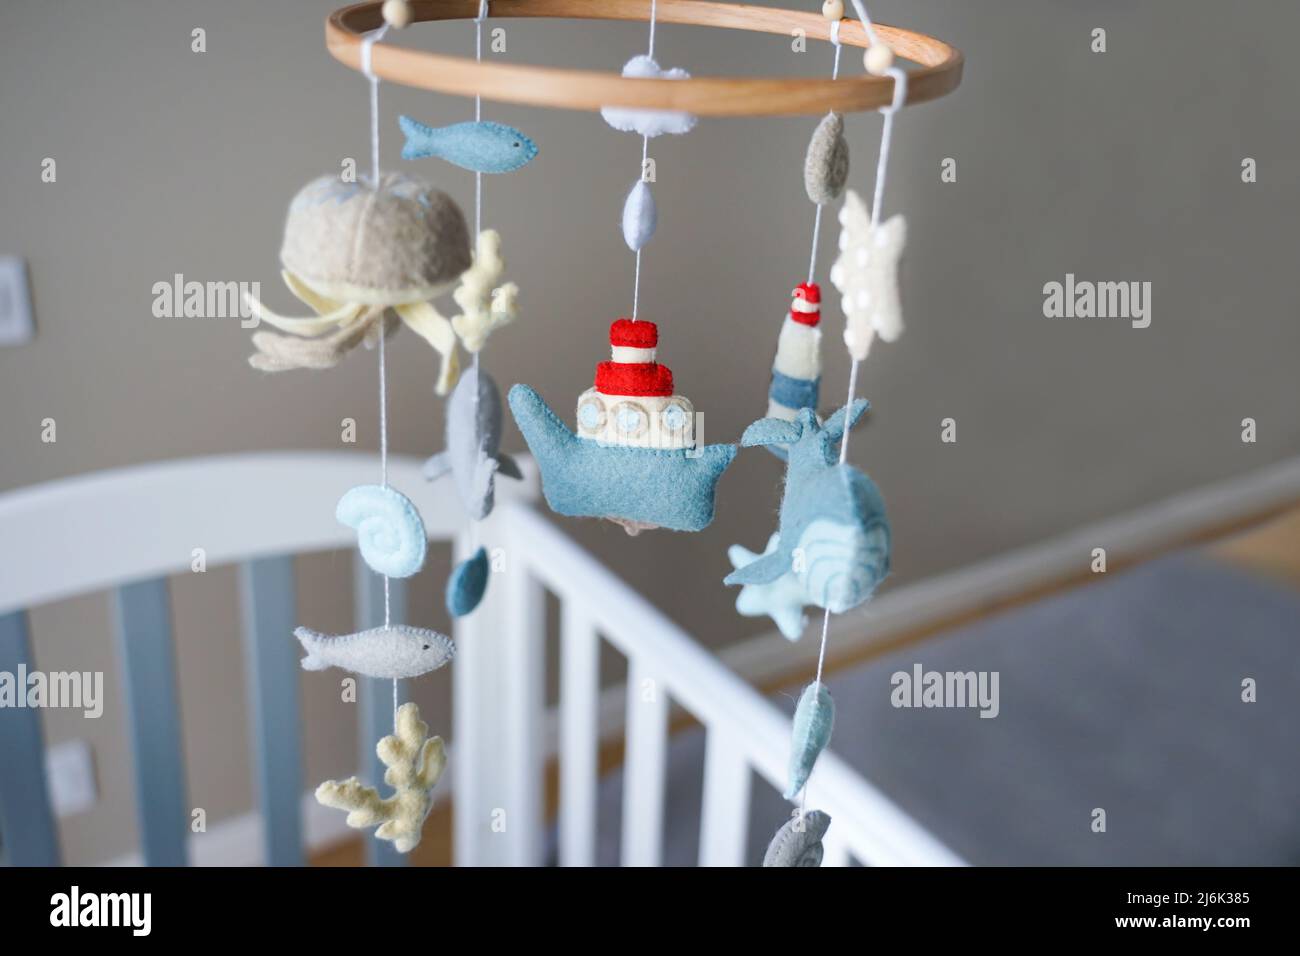 Diy craft baby crib mobile. Toys hang over the crib Stock Photo